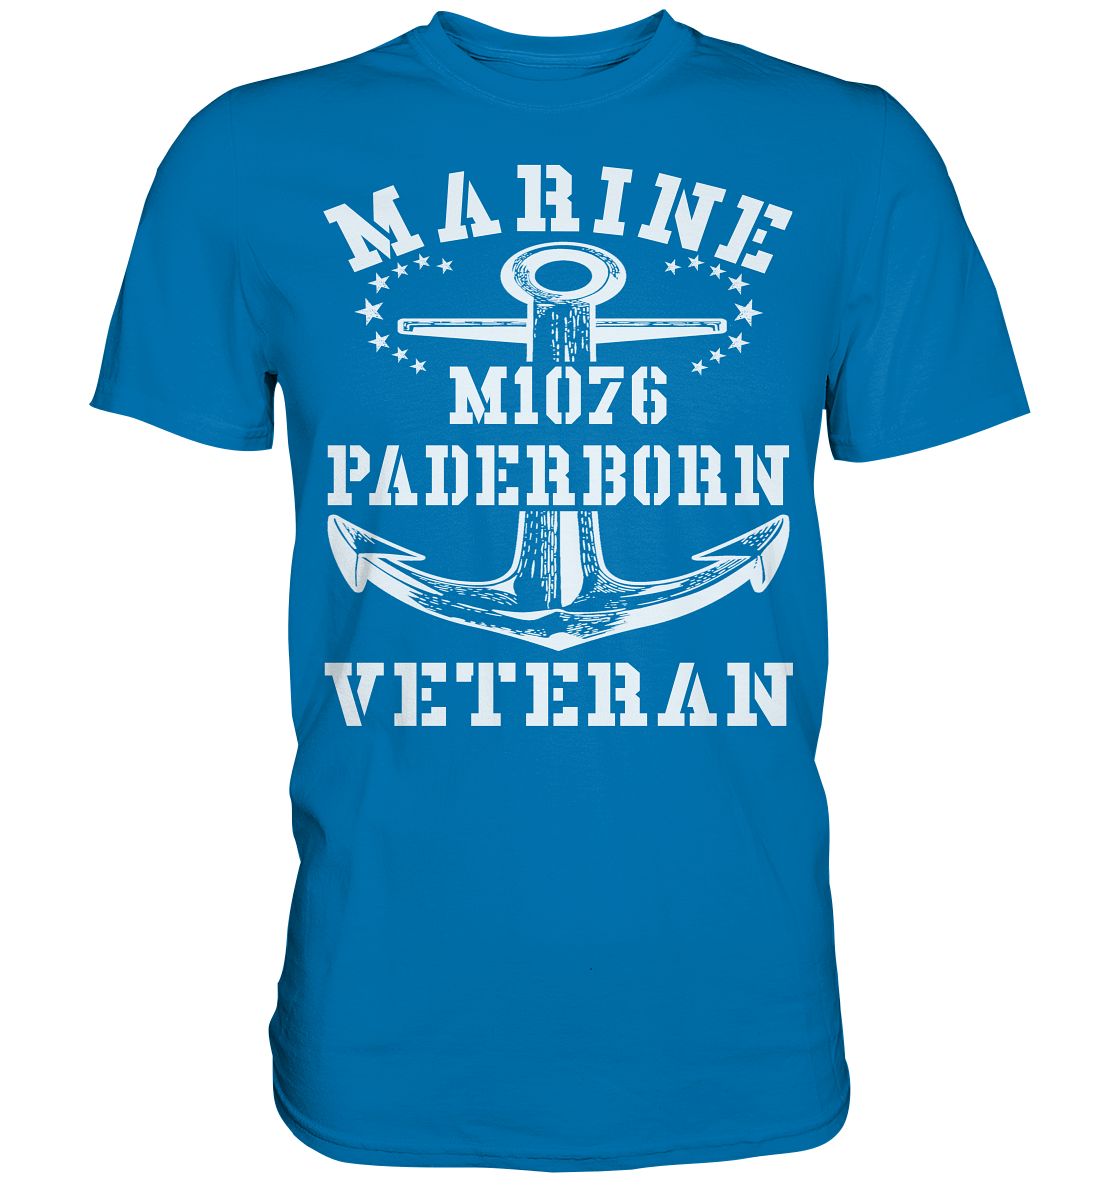 MARINE VETERAN M1076 PADERBORN - Premium Shirt